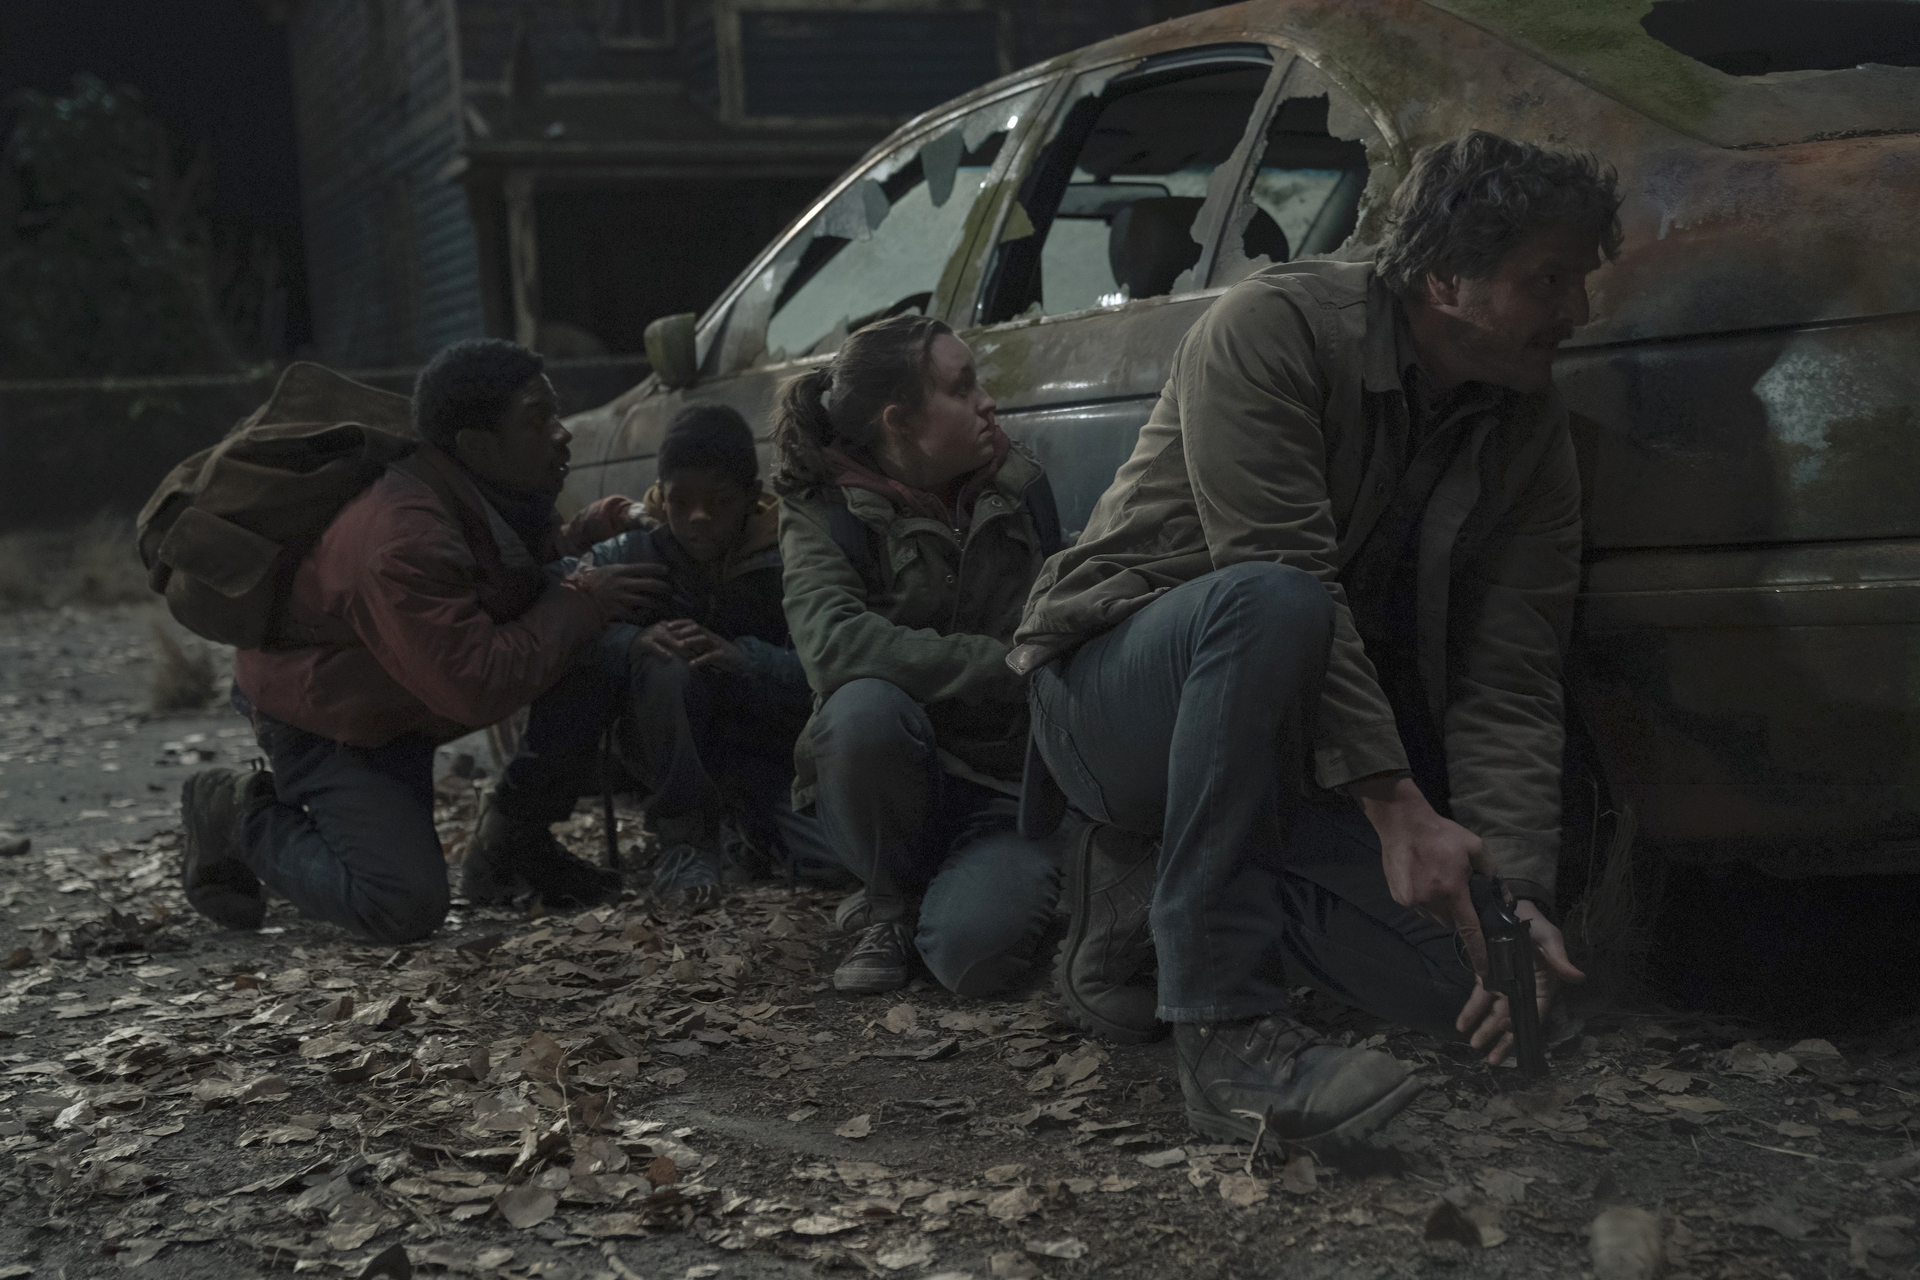 Joel (Pedro Pascal), Ellie (Bella Ramsey), Henry, and Sam crouching behind a car